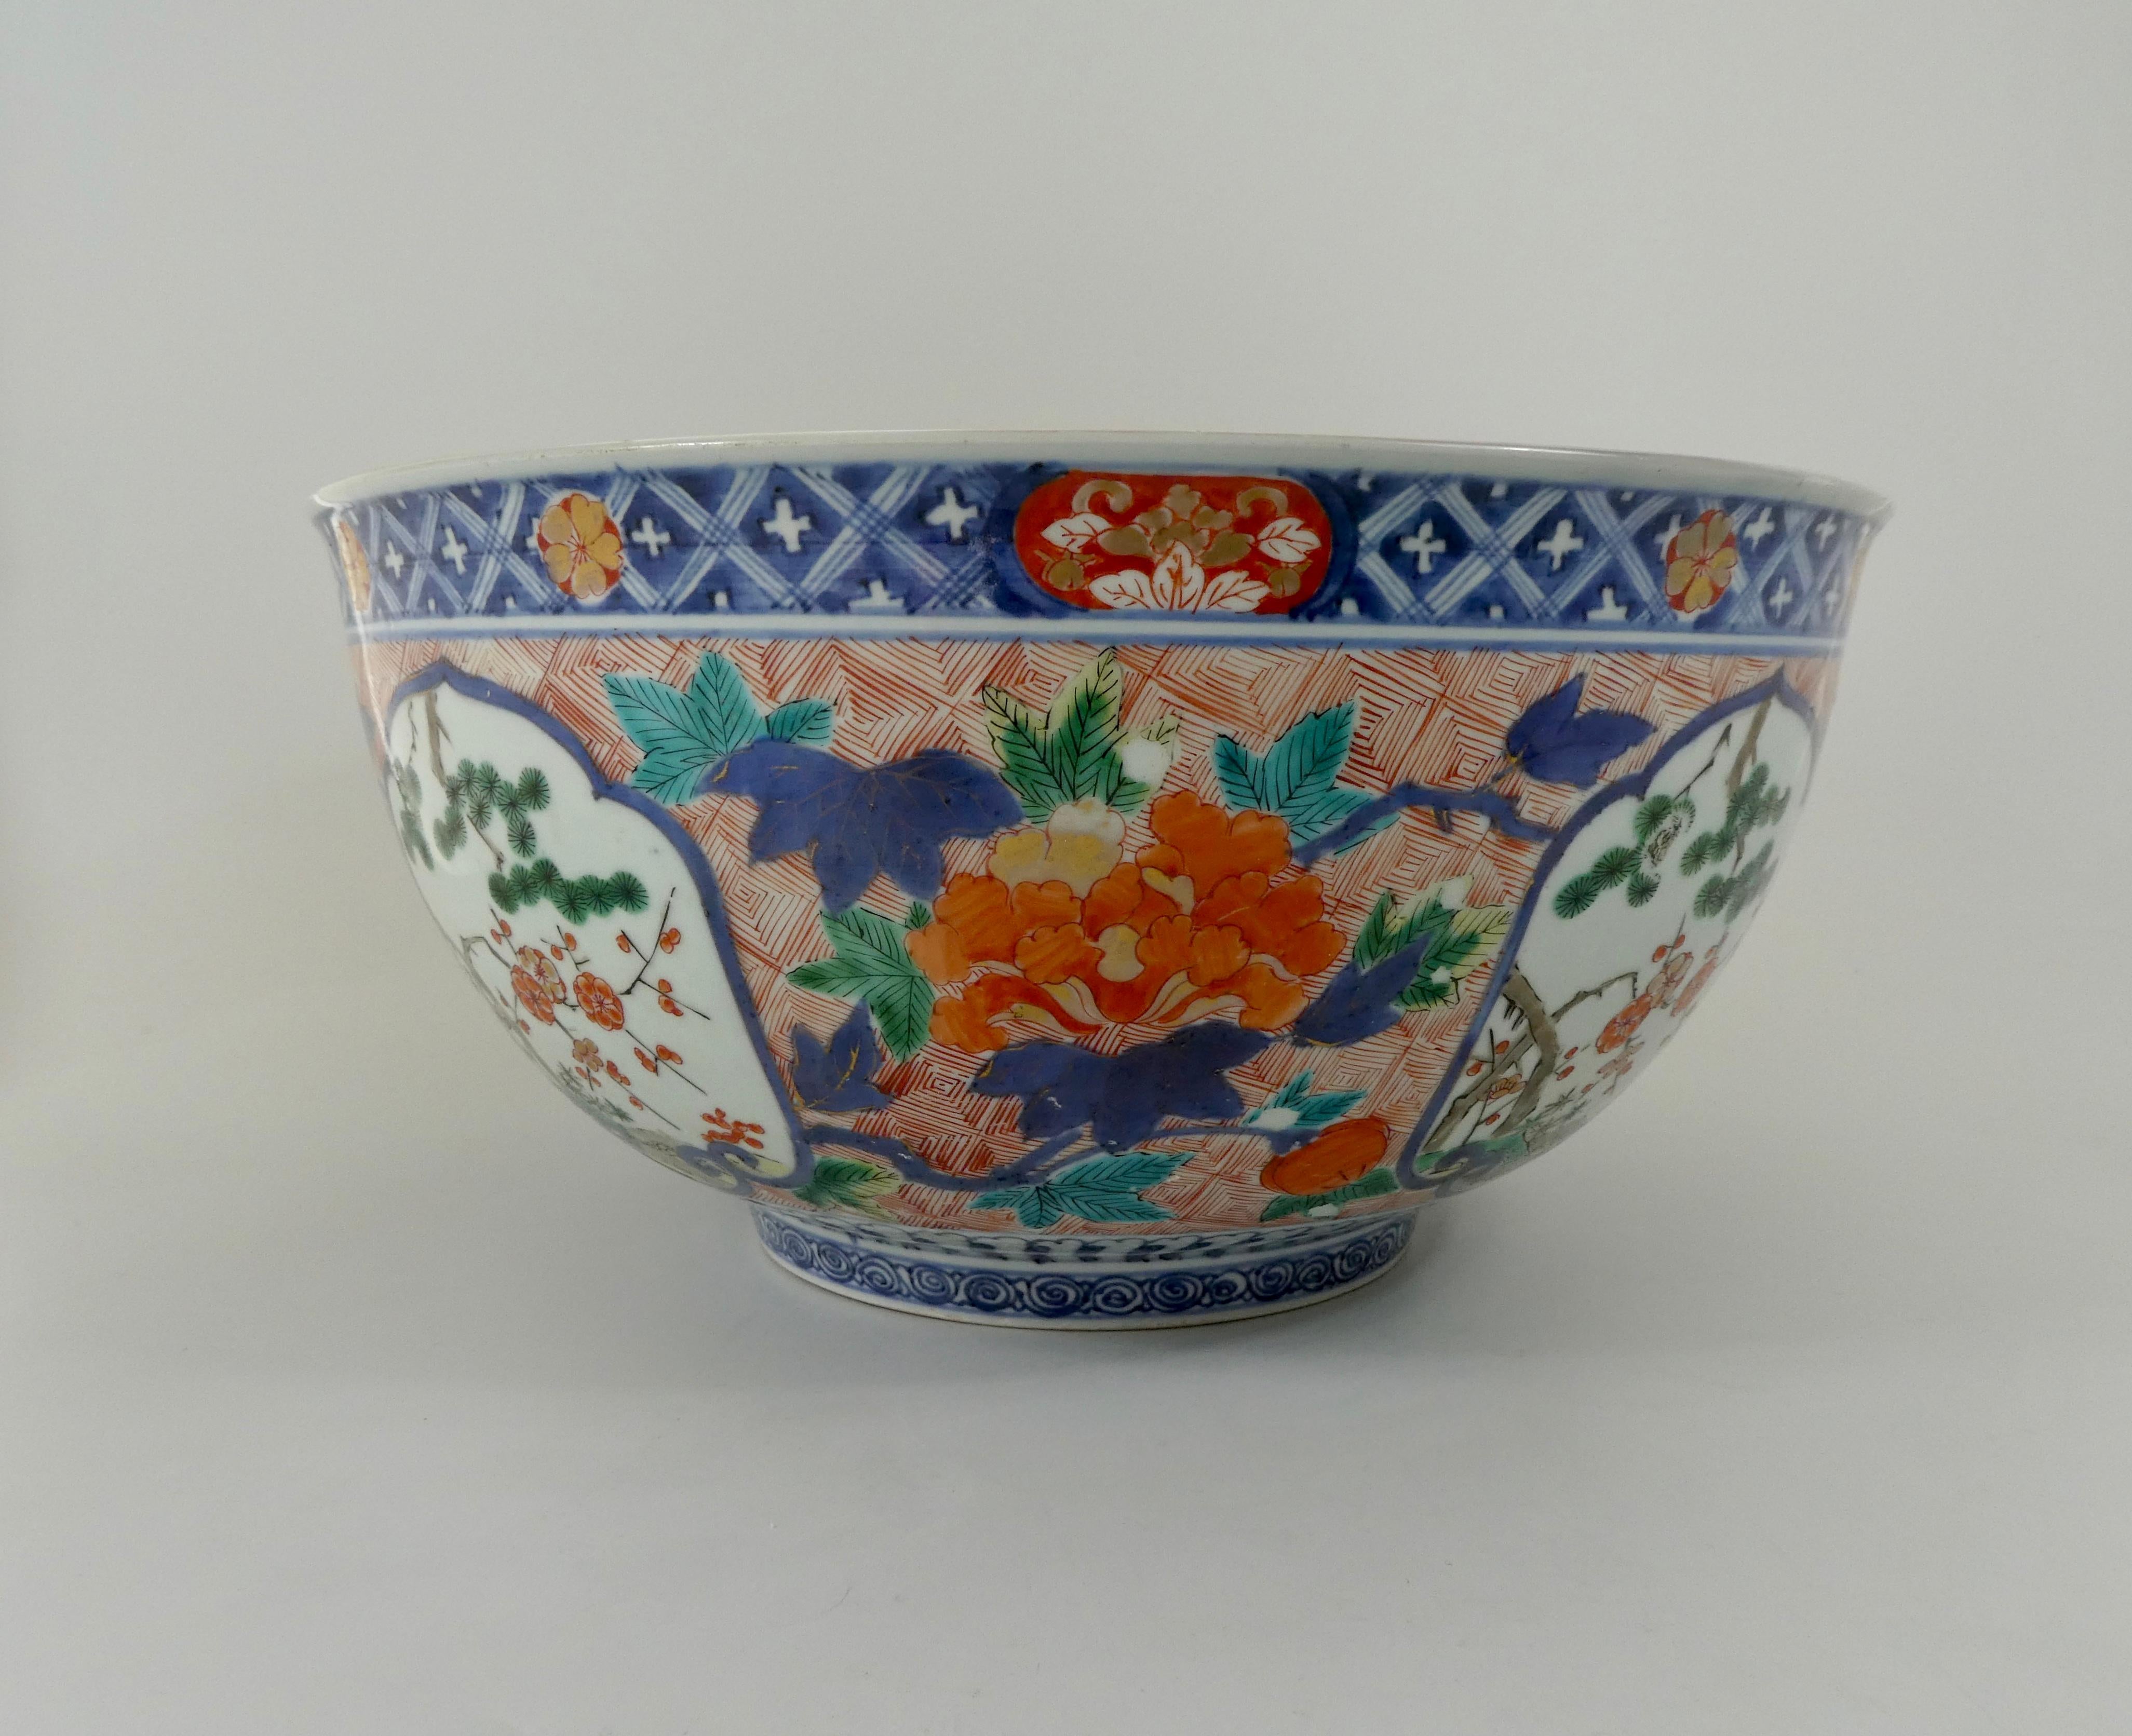 Porcelain Fine and Large Imari Bowl Decorated with Fish, circa 1680, Genroku Period